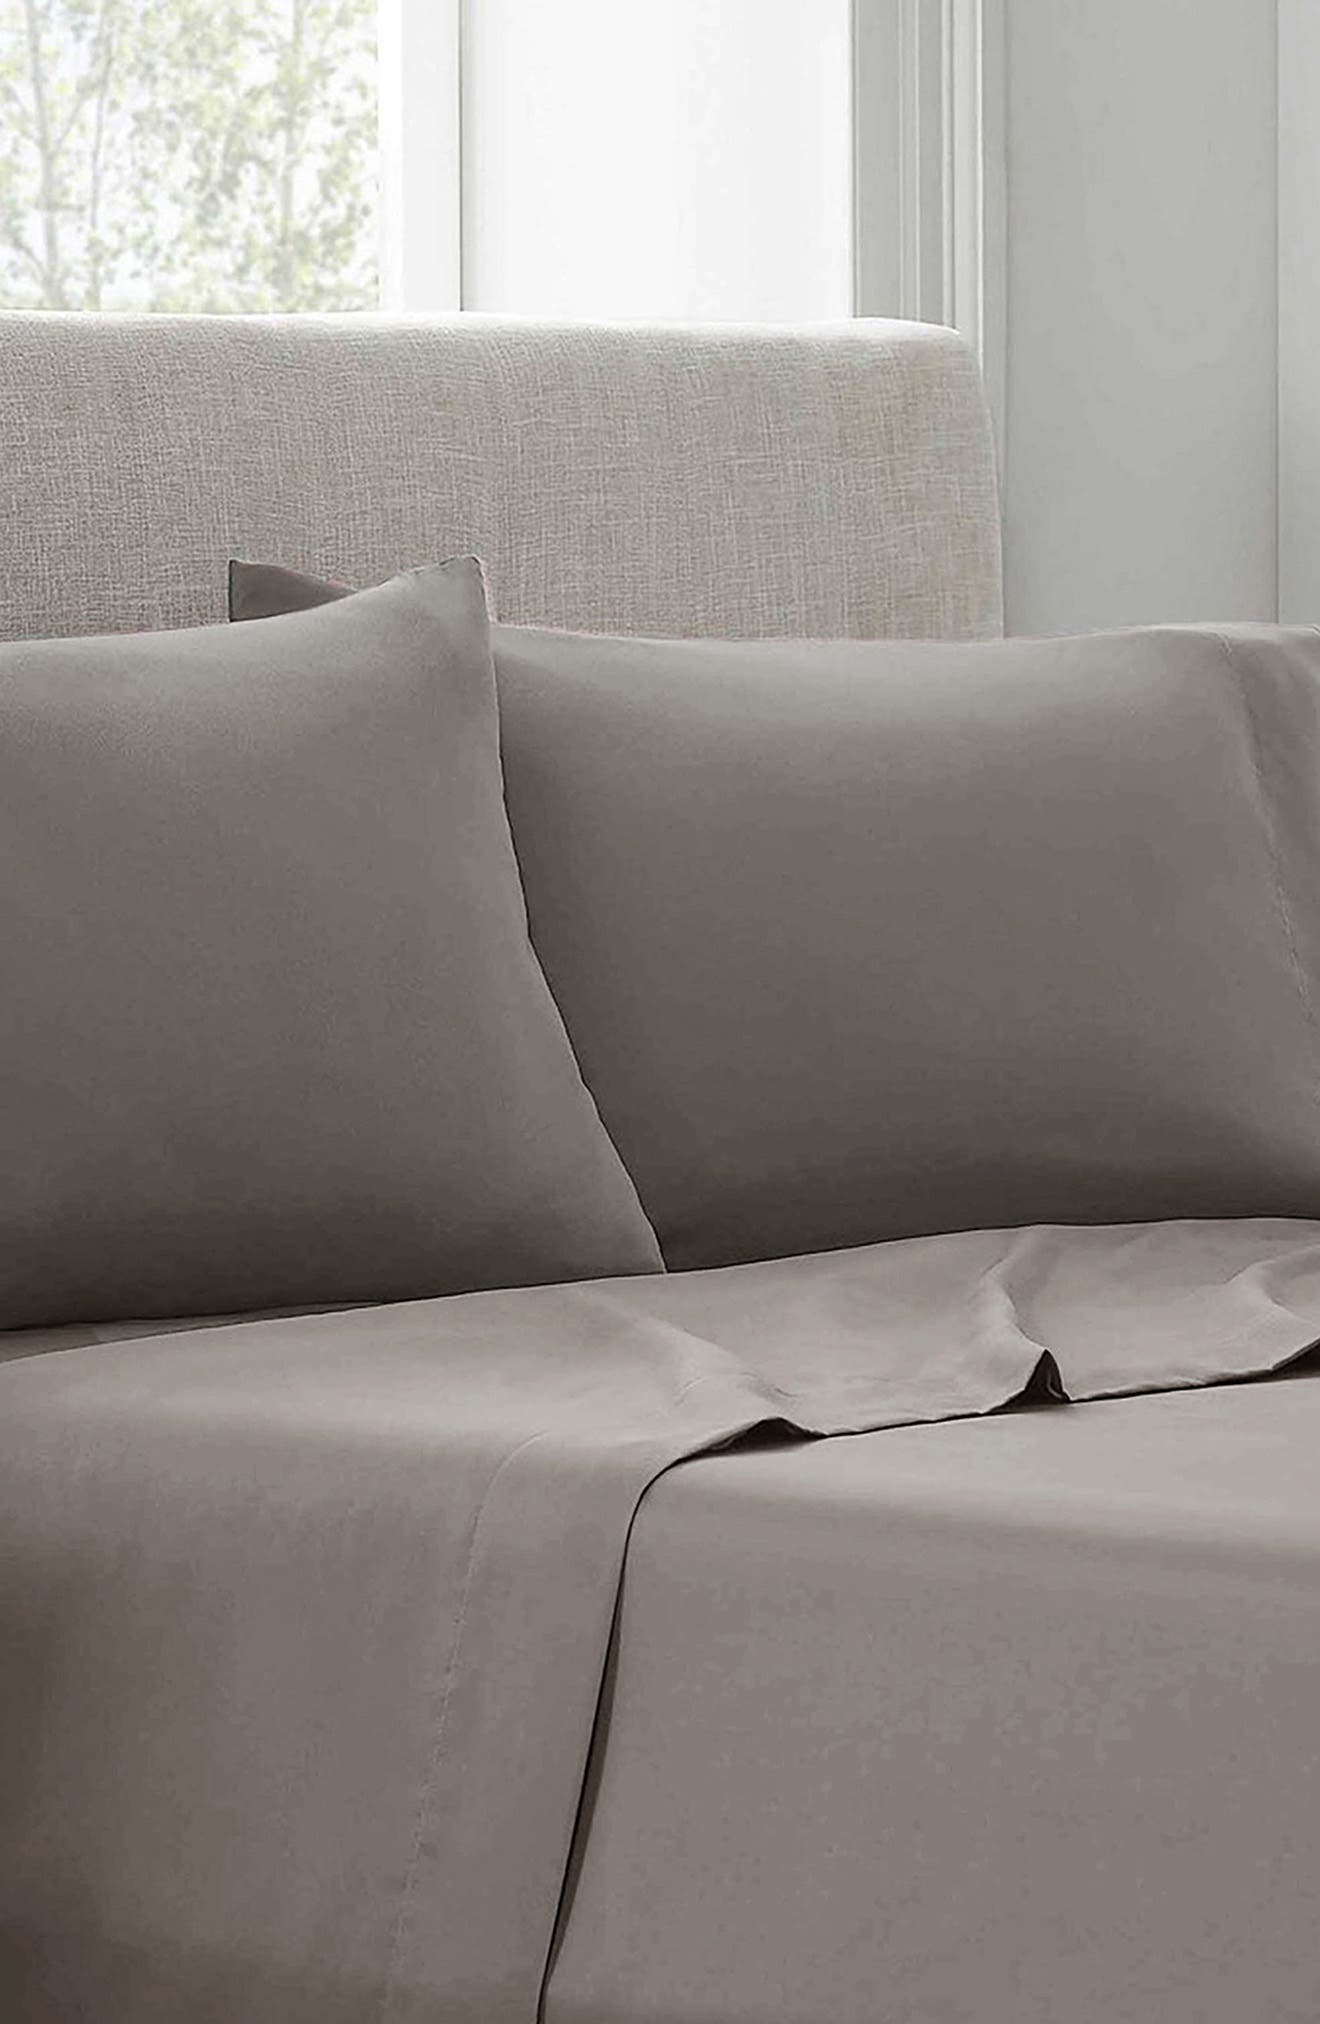 Better Homes & Gardens Set of 2 Standard /Queen size Pillowcases White NEW